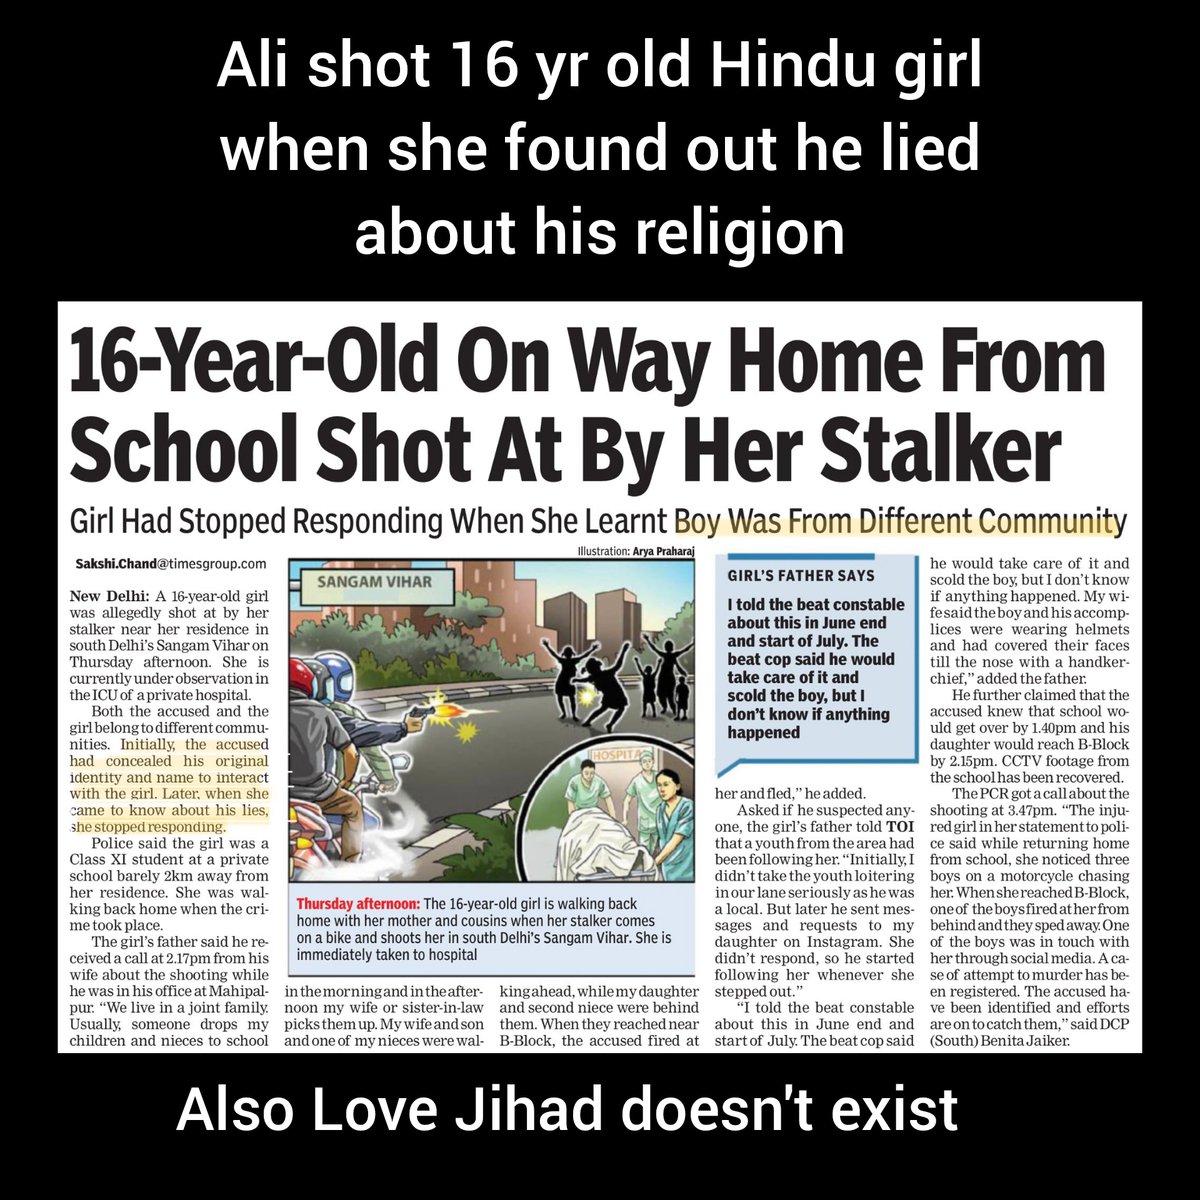 Imagine having a daughter at home and still supporting Love Jihadis.